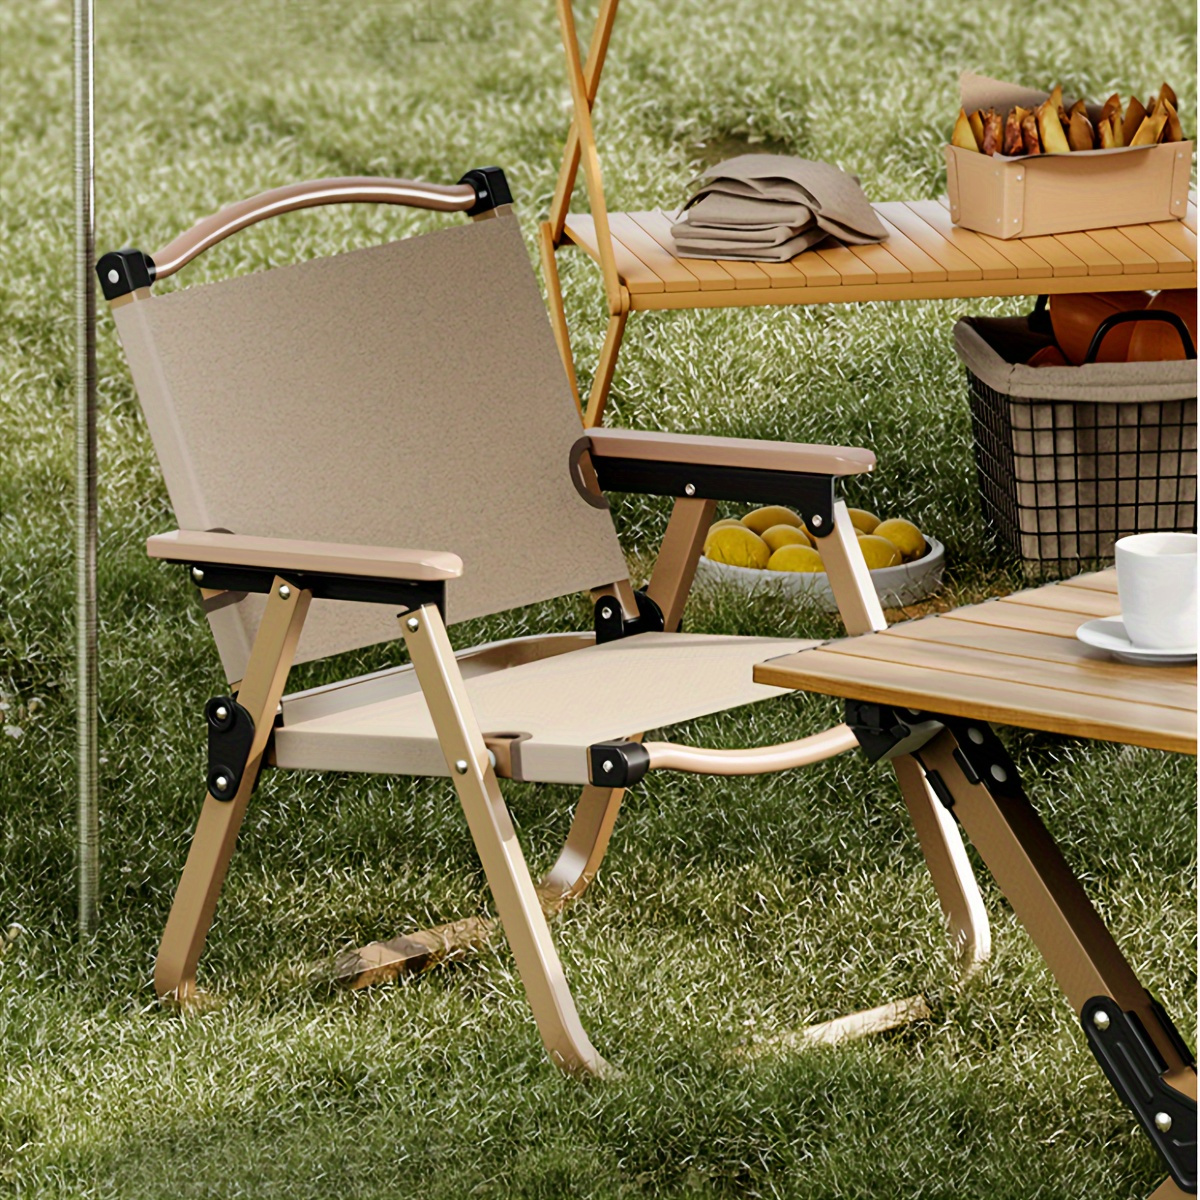 1pc Outdoor Folding Chair, Portable Kermit Chair, Fishing Camping Picnic  Chair, Beach Chairs